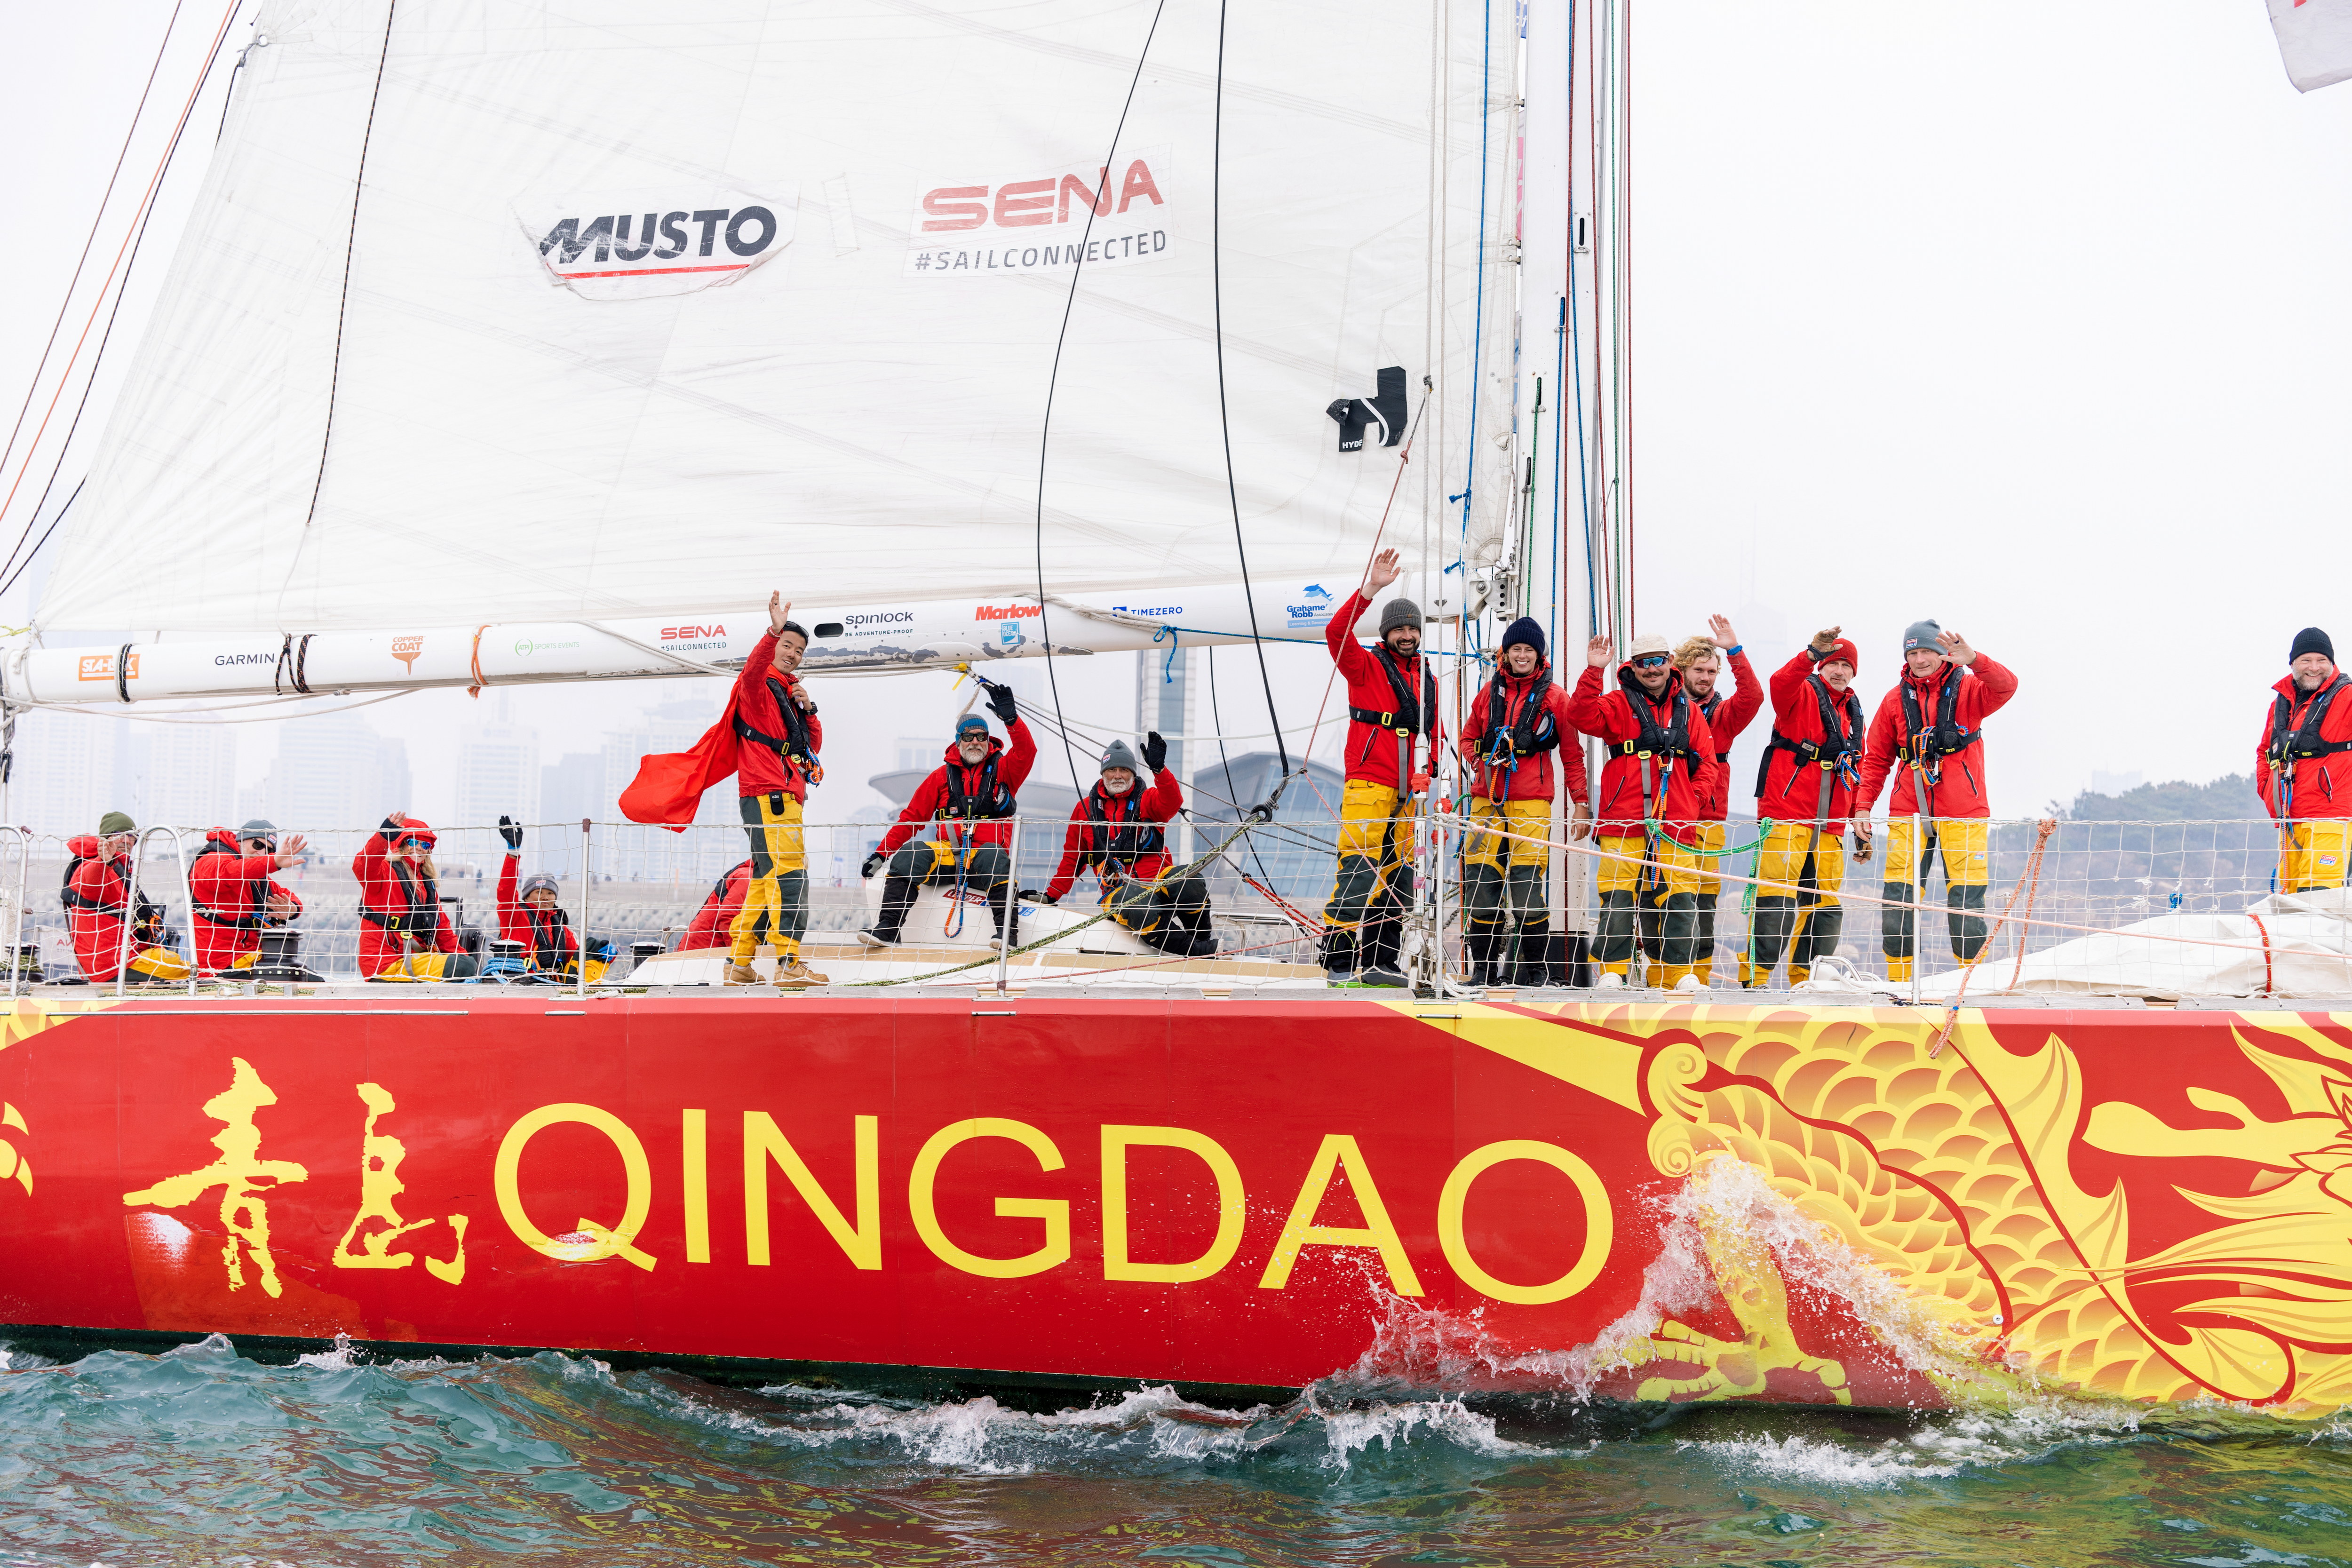 Qingdao leads parade of sail from Qingdao 